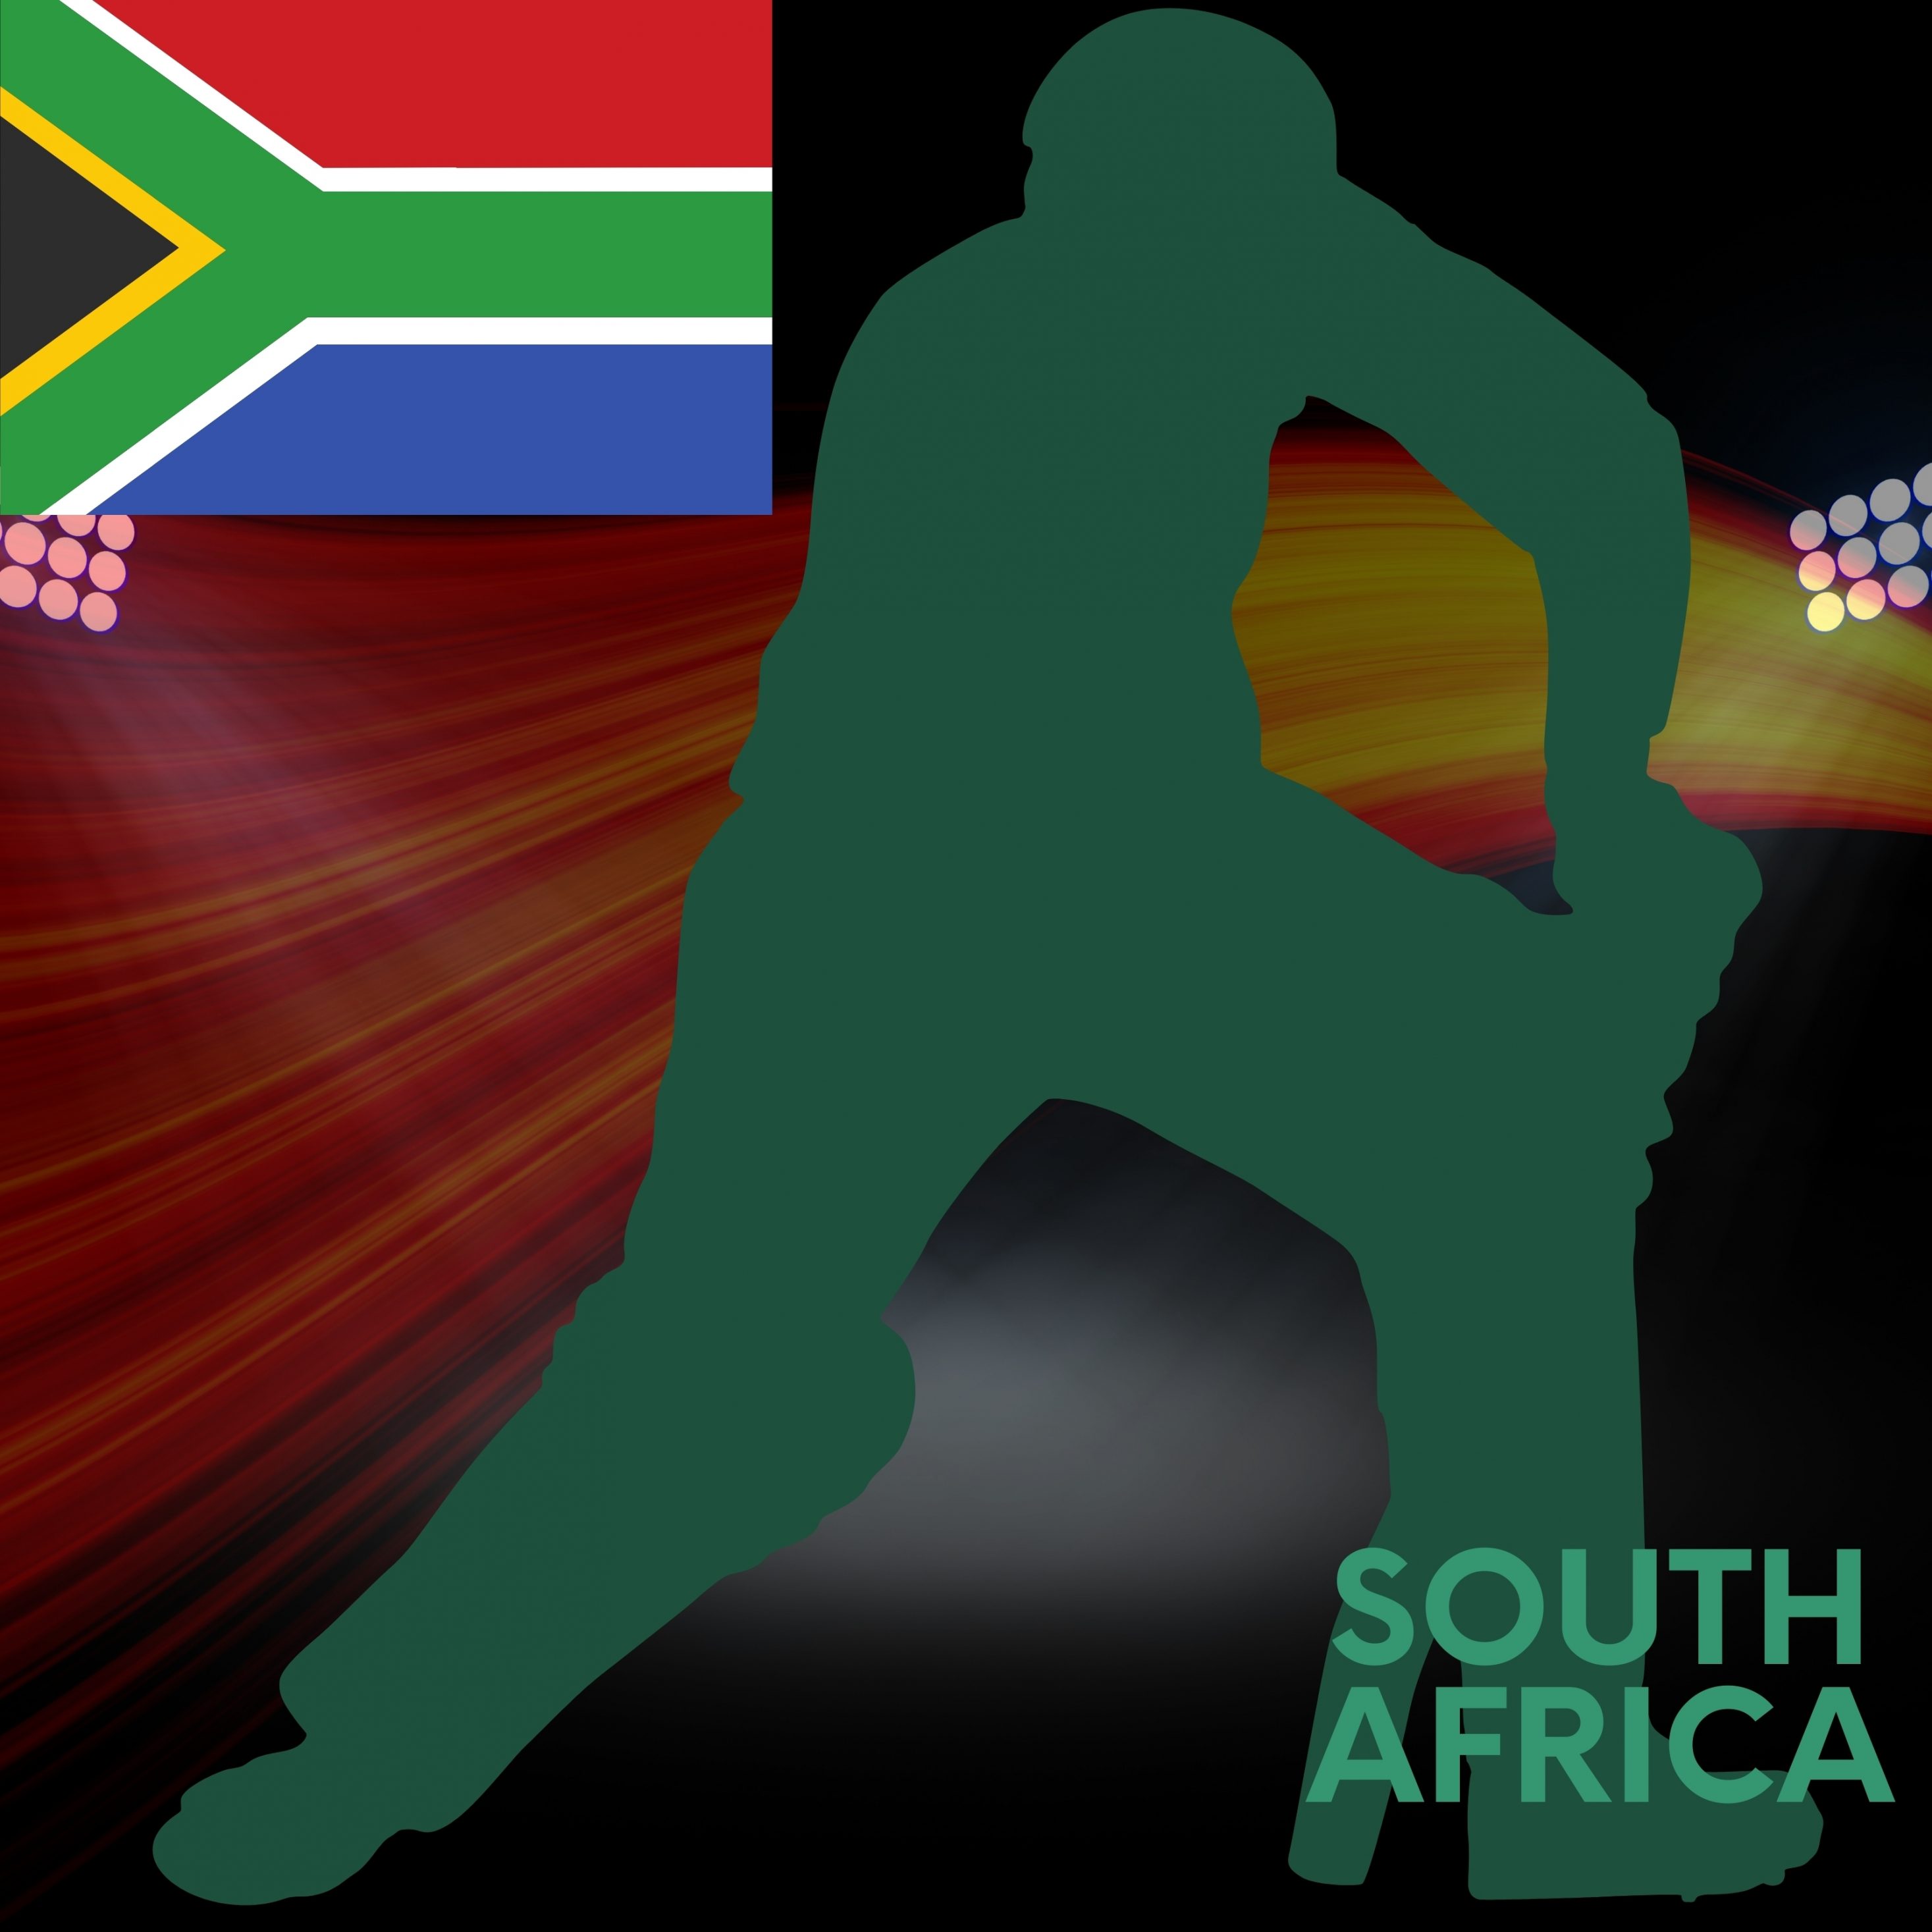 2934x2934 iOS iPad wallpaper 4k South Africa Cricket Stadium iPad Wallpaper 2934x2934 pixels resolution